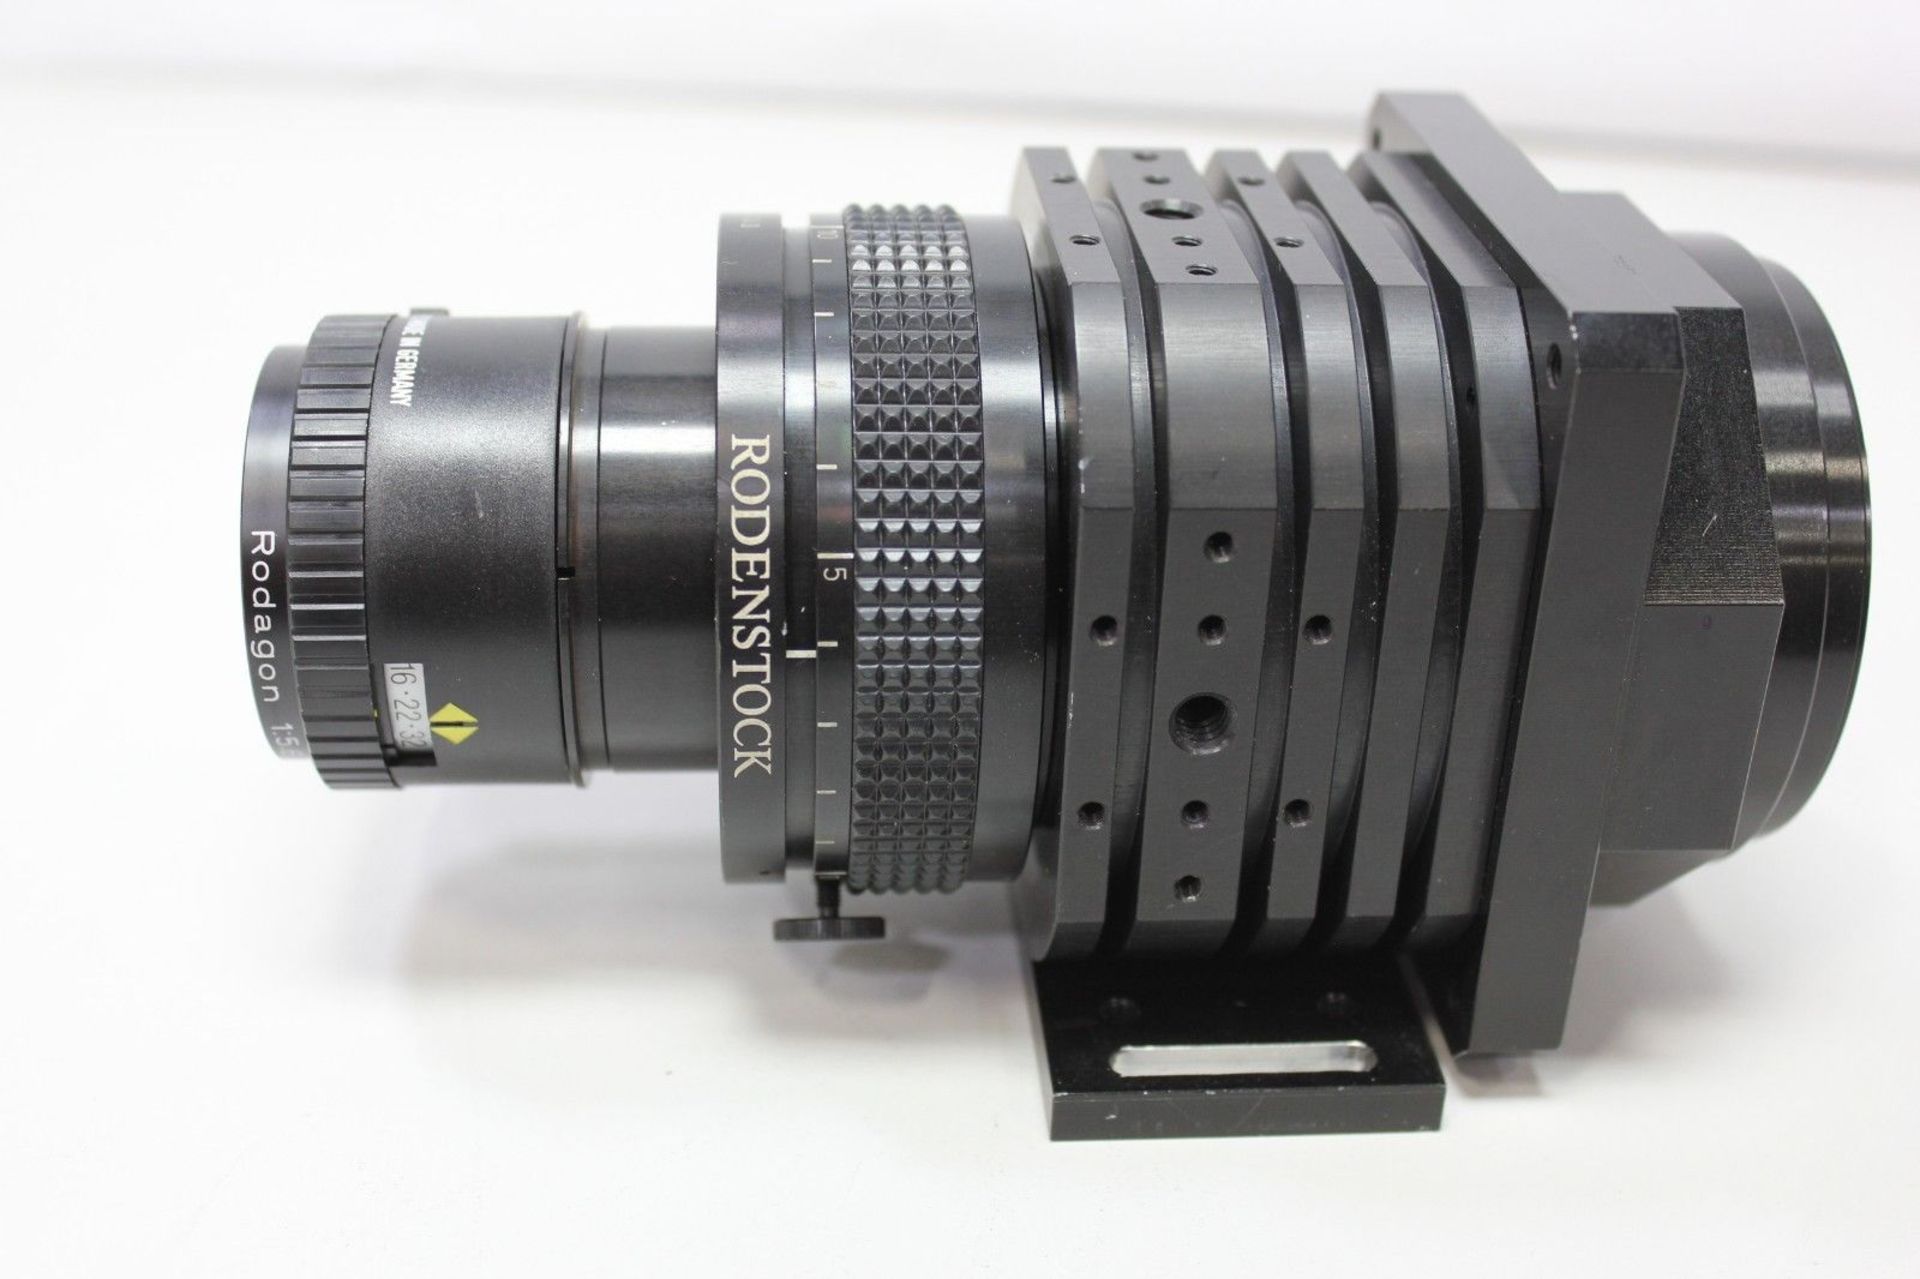 Schafter & Kirchhoff Digital Line Scan Camera With Rodenstock Lens - Image 3 of 5